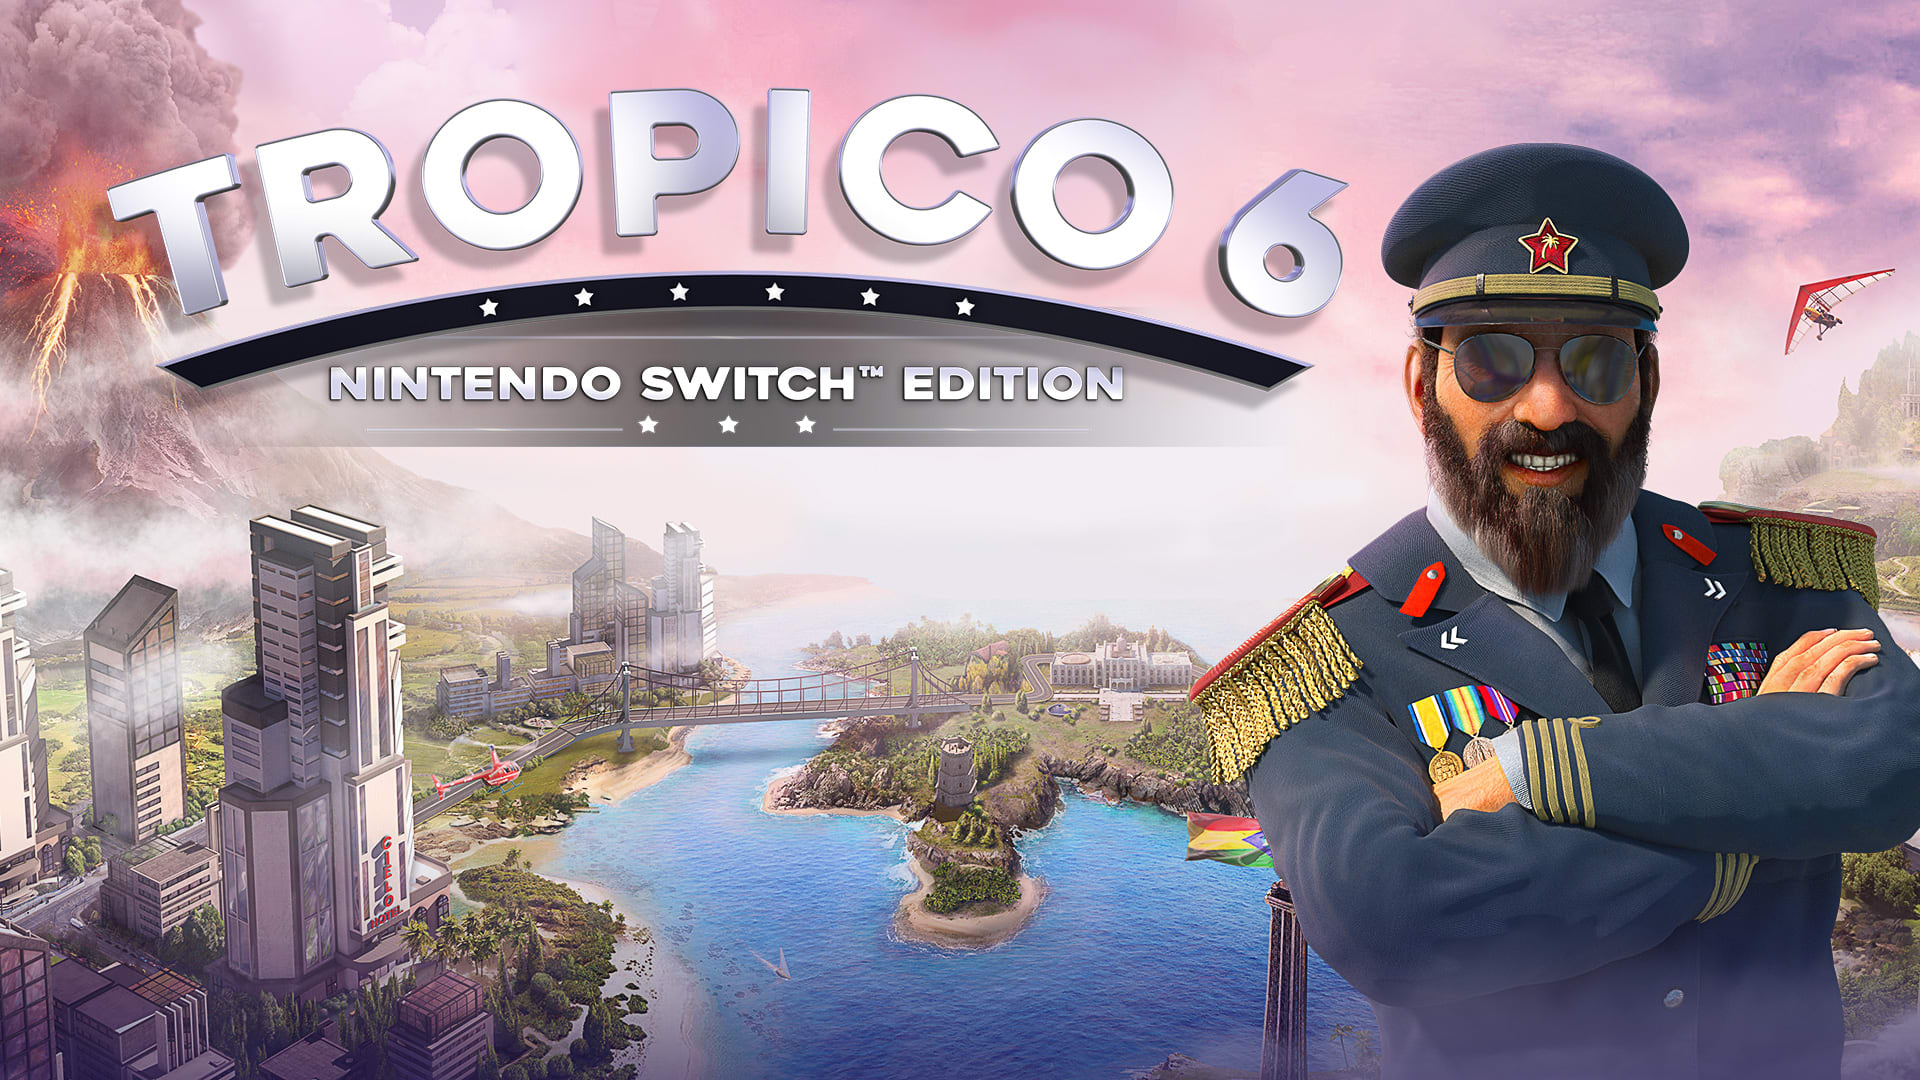 Tropico 6 - Nintendo Switch™ Edition